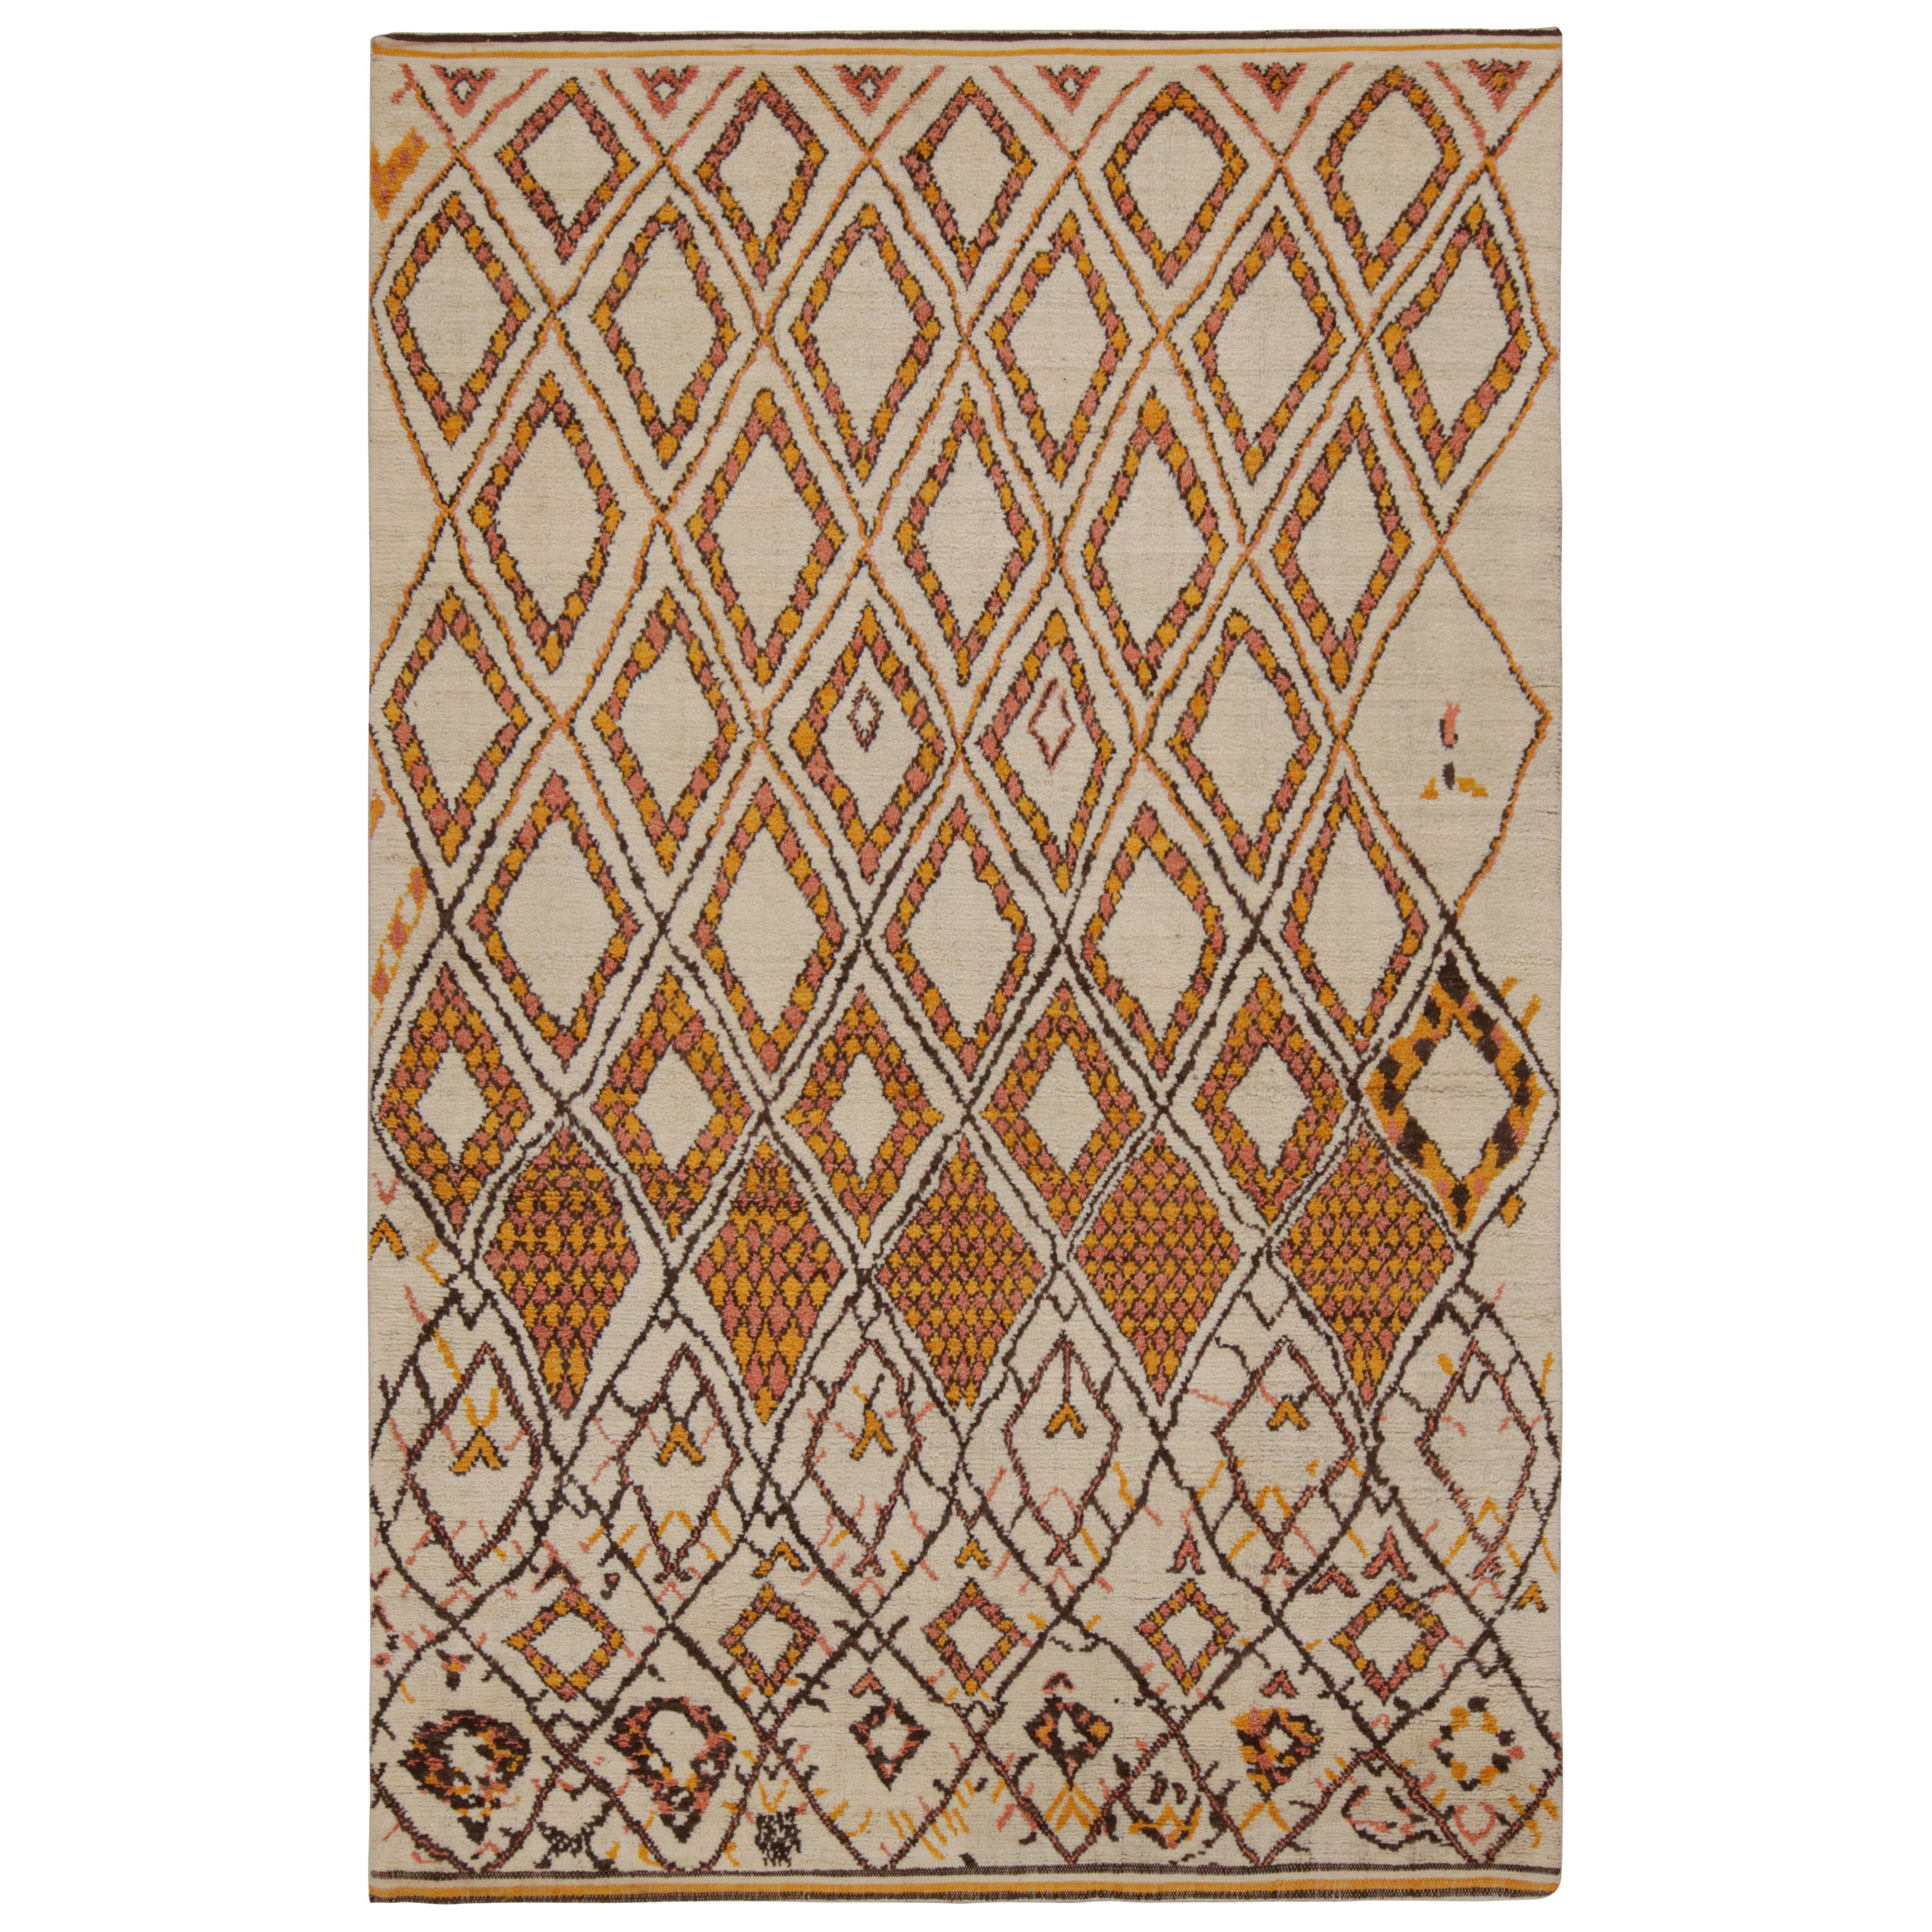 Rug & Kilim’s Moroccan Style Rug in Beige-Brown & Orange Geometric Patterns For Sale